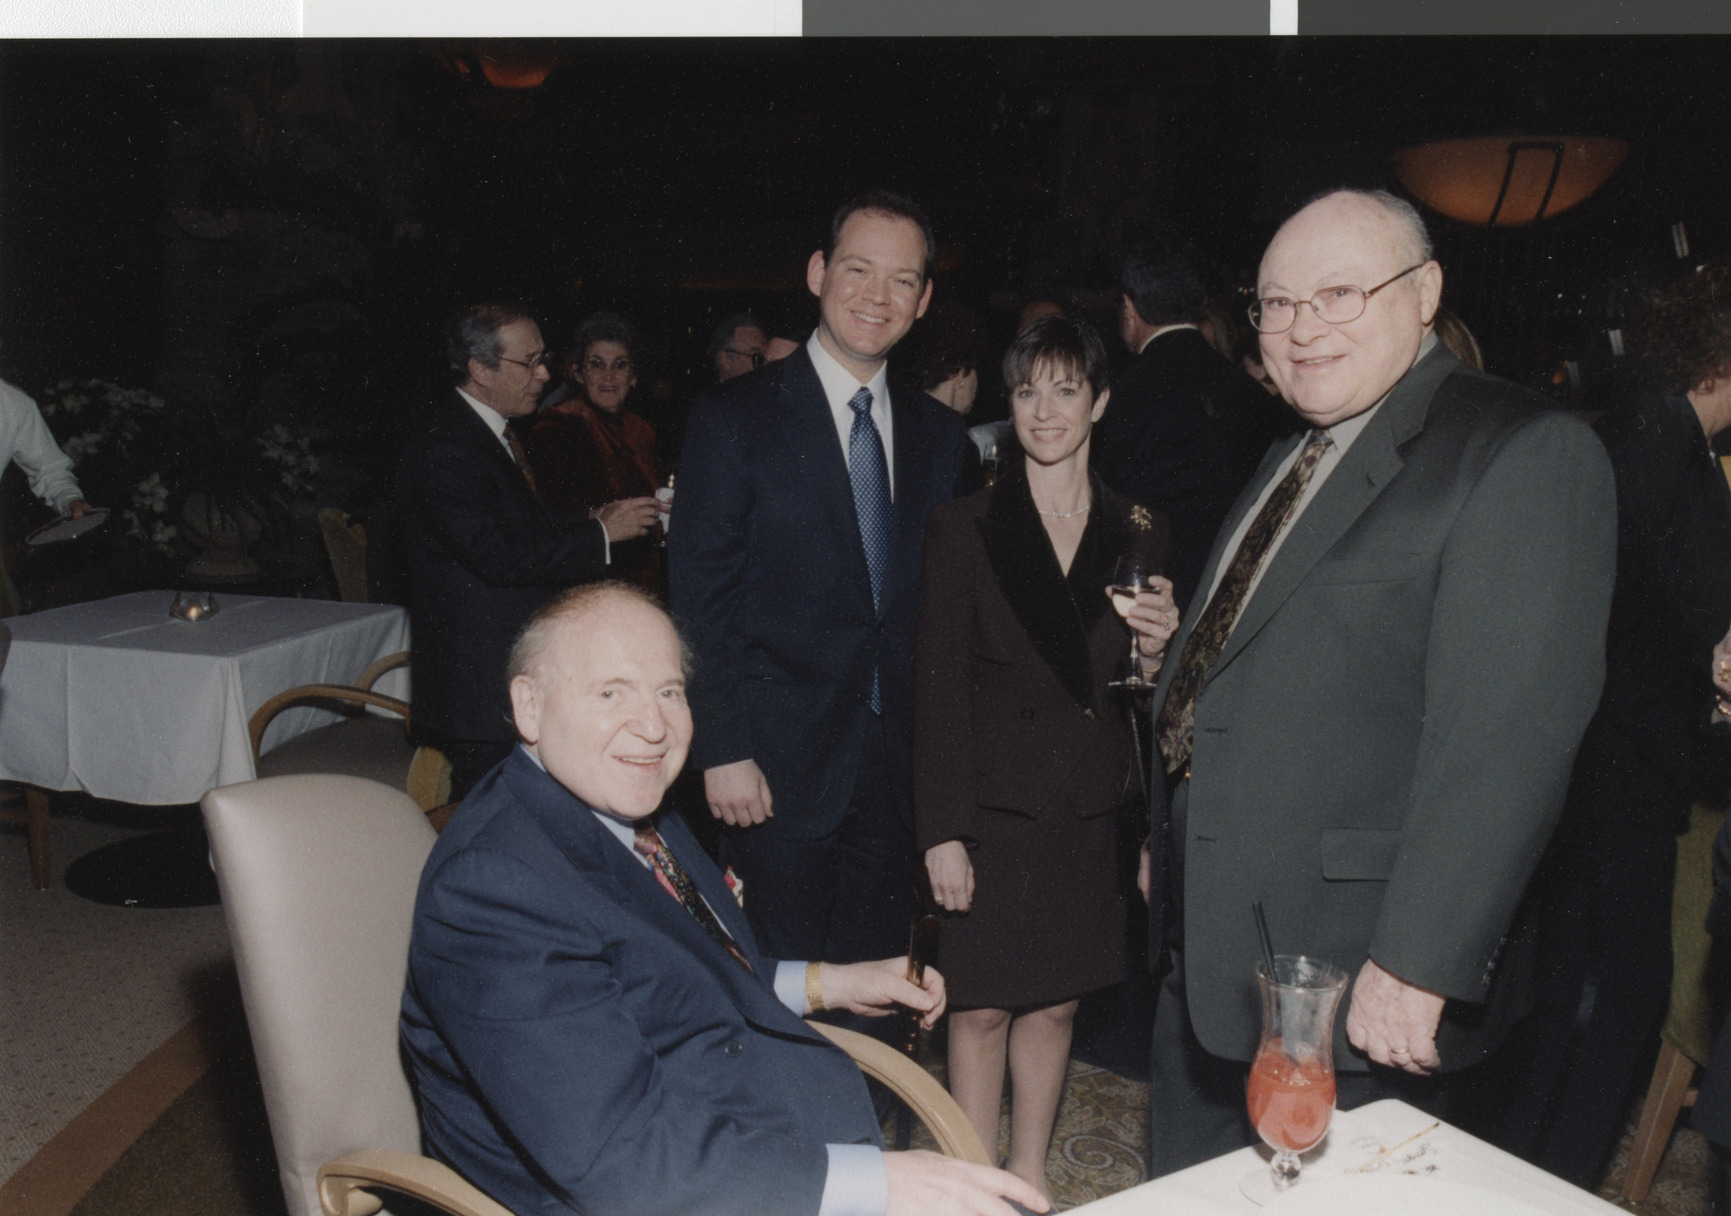 Photograph of Sheldon Adelson at Major Gifts Dinner, 2001